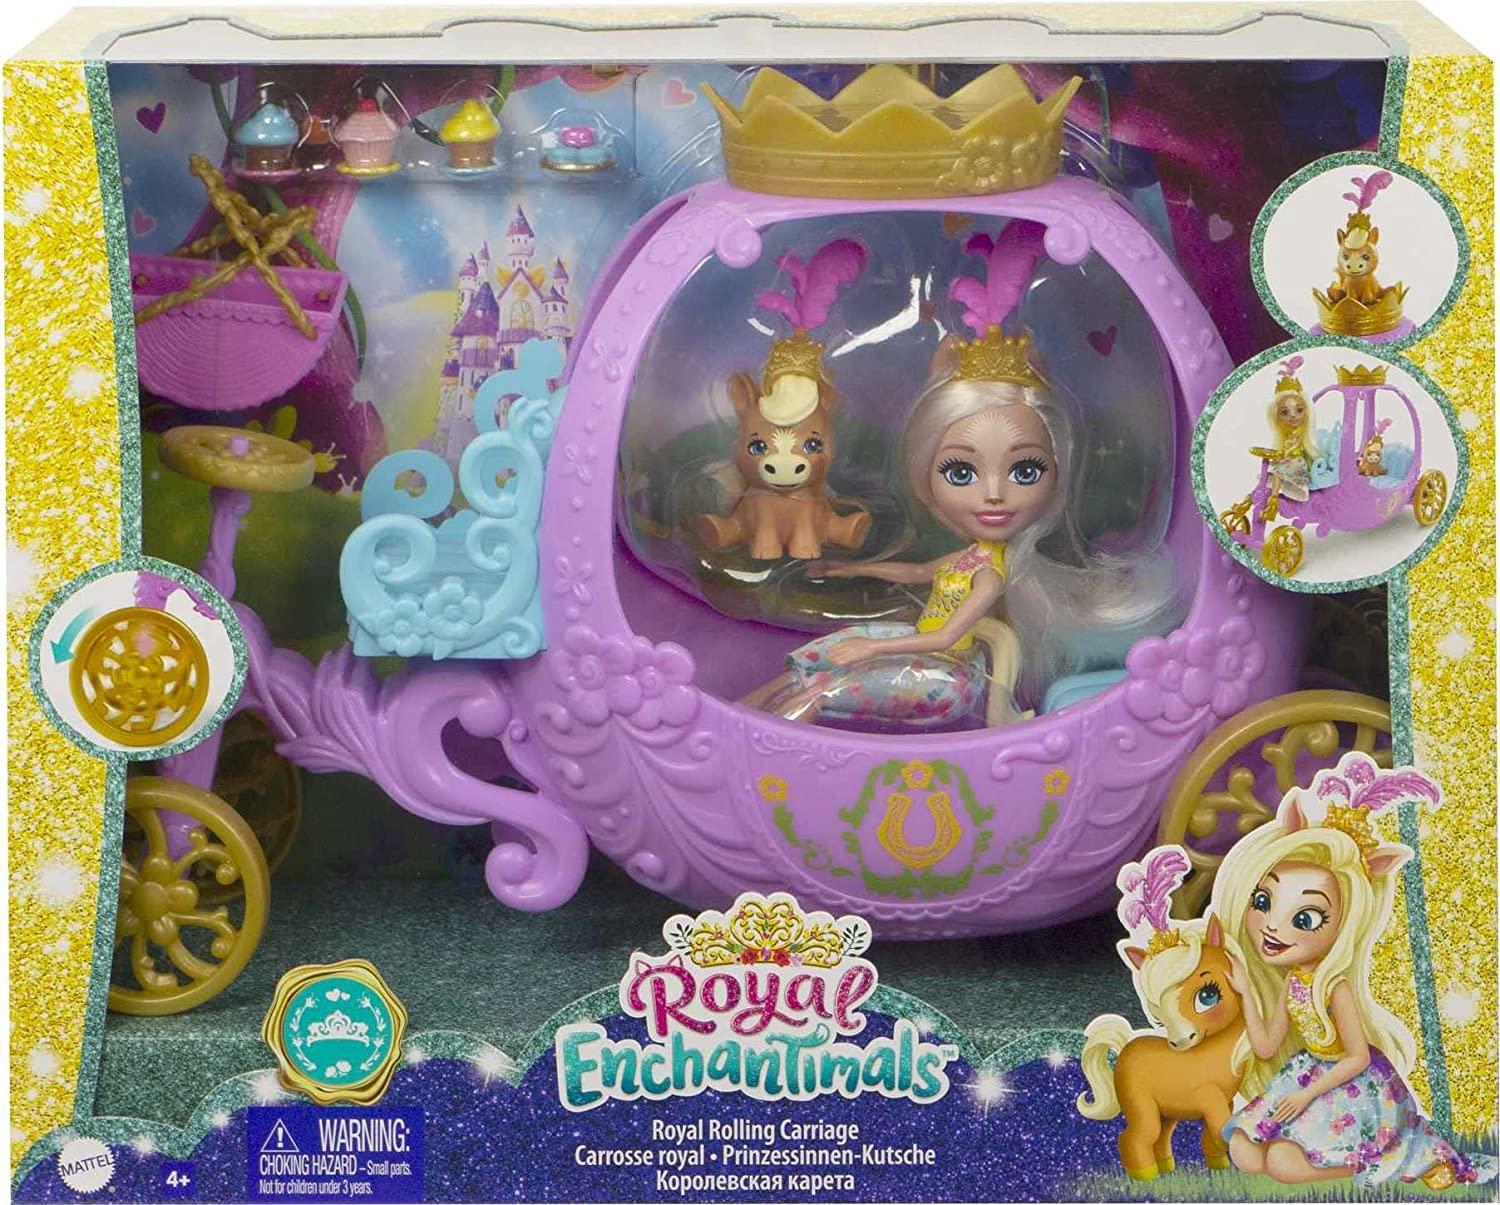 Royal Enchantimals Royal Rolling Carriage Playset